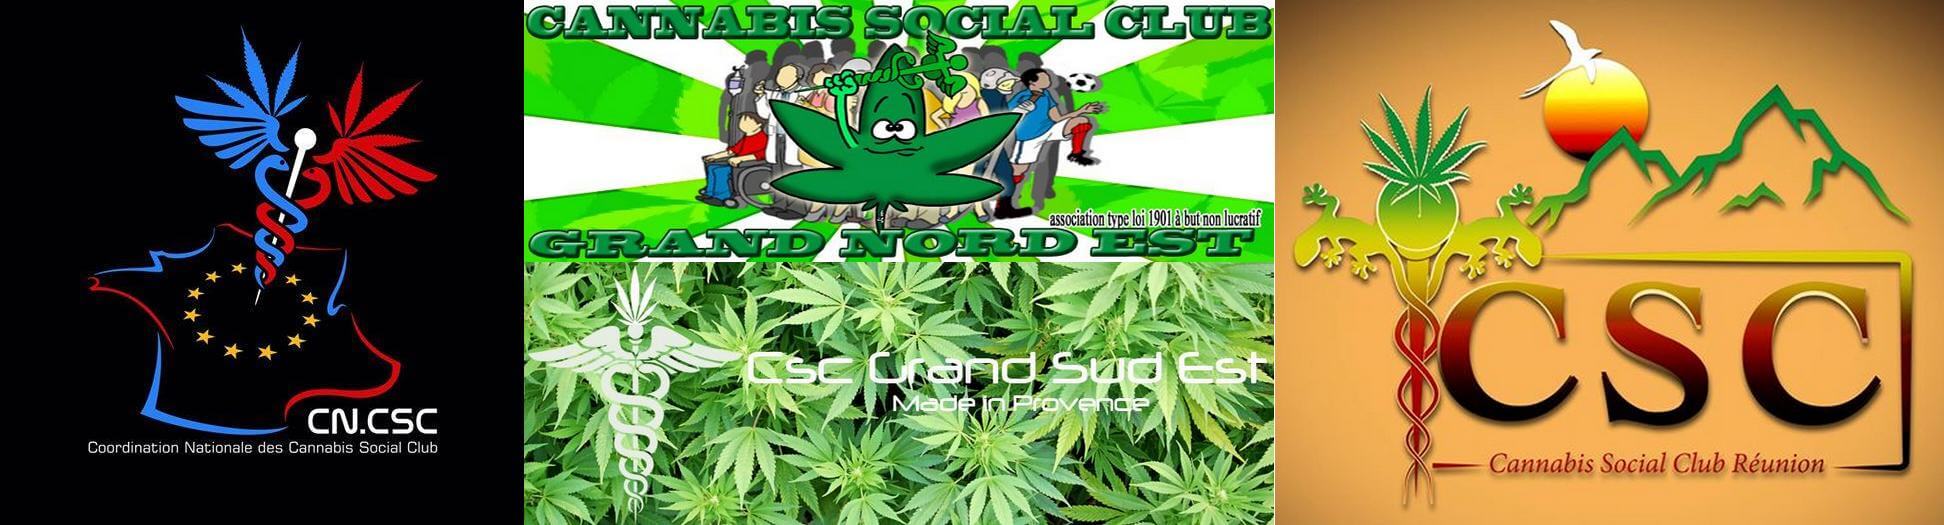 Coordination Nationale des Cannabis Social Clubs